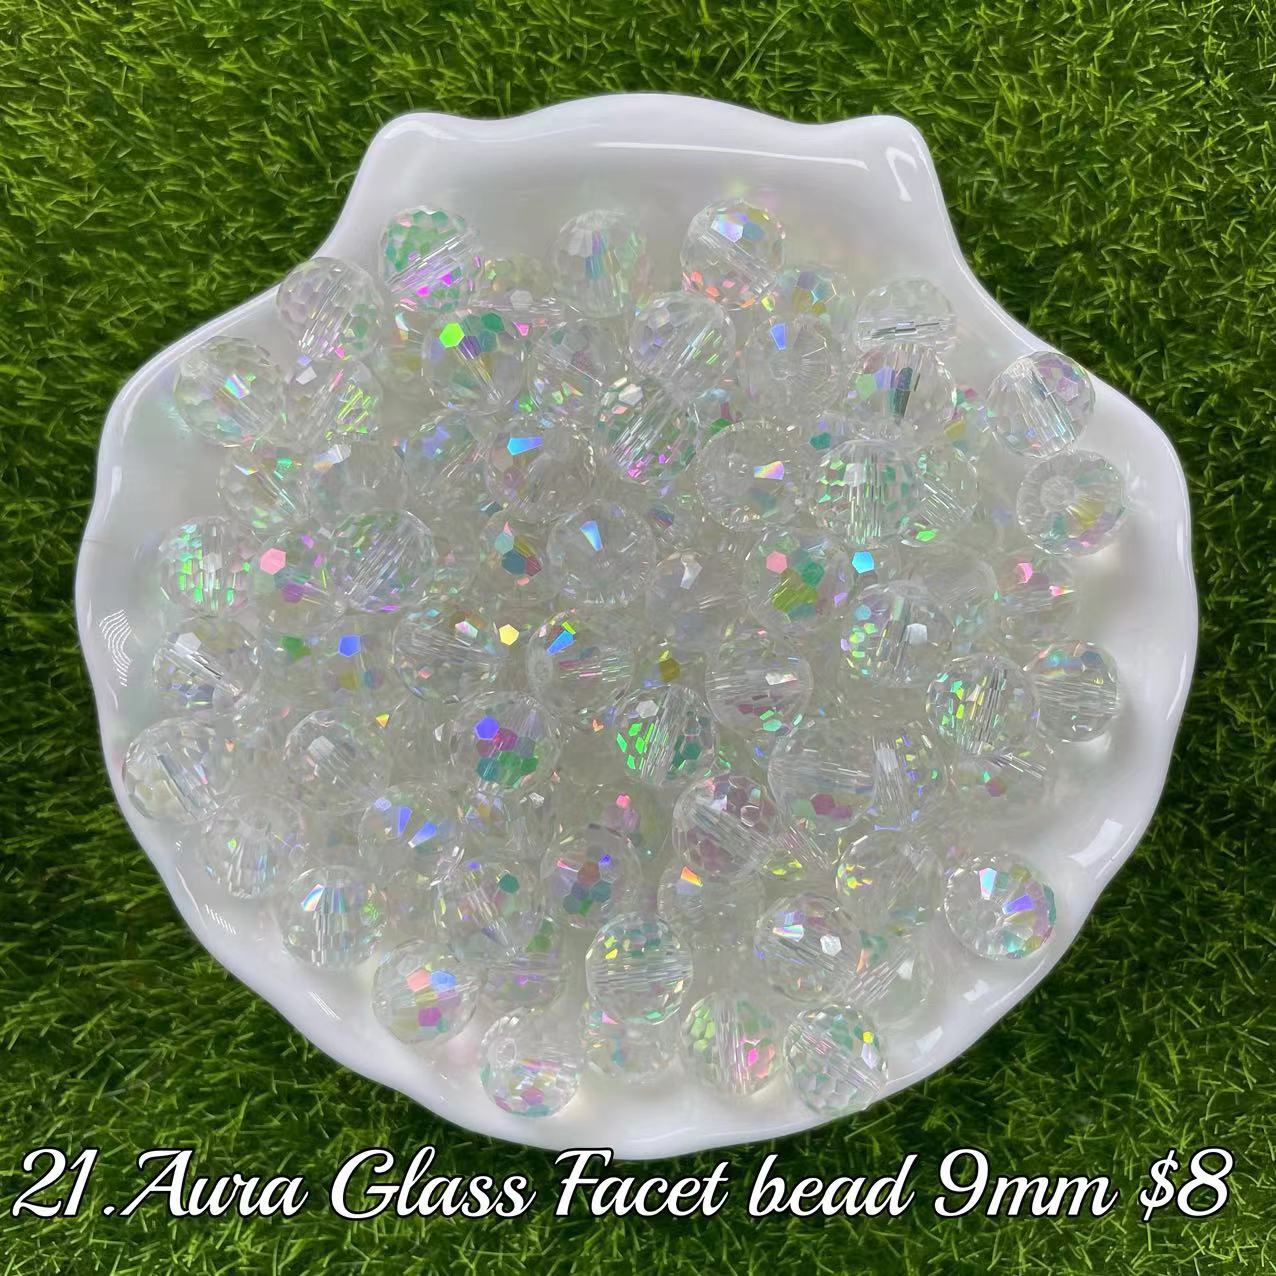 One bowl crystal bead- travis01-can make 6pcs bracelets.